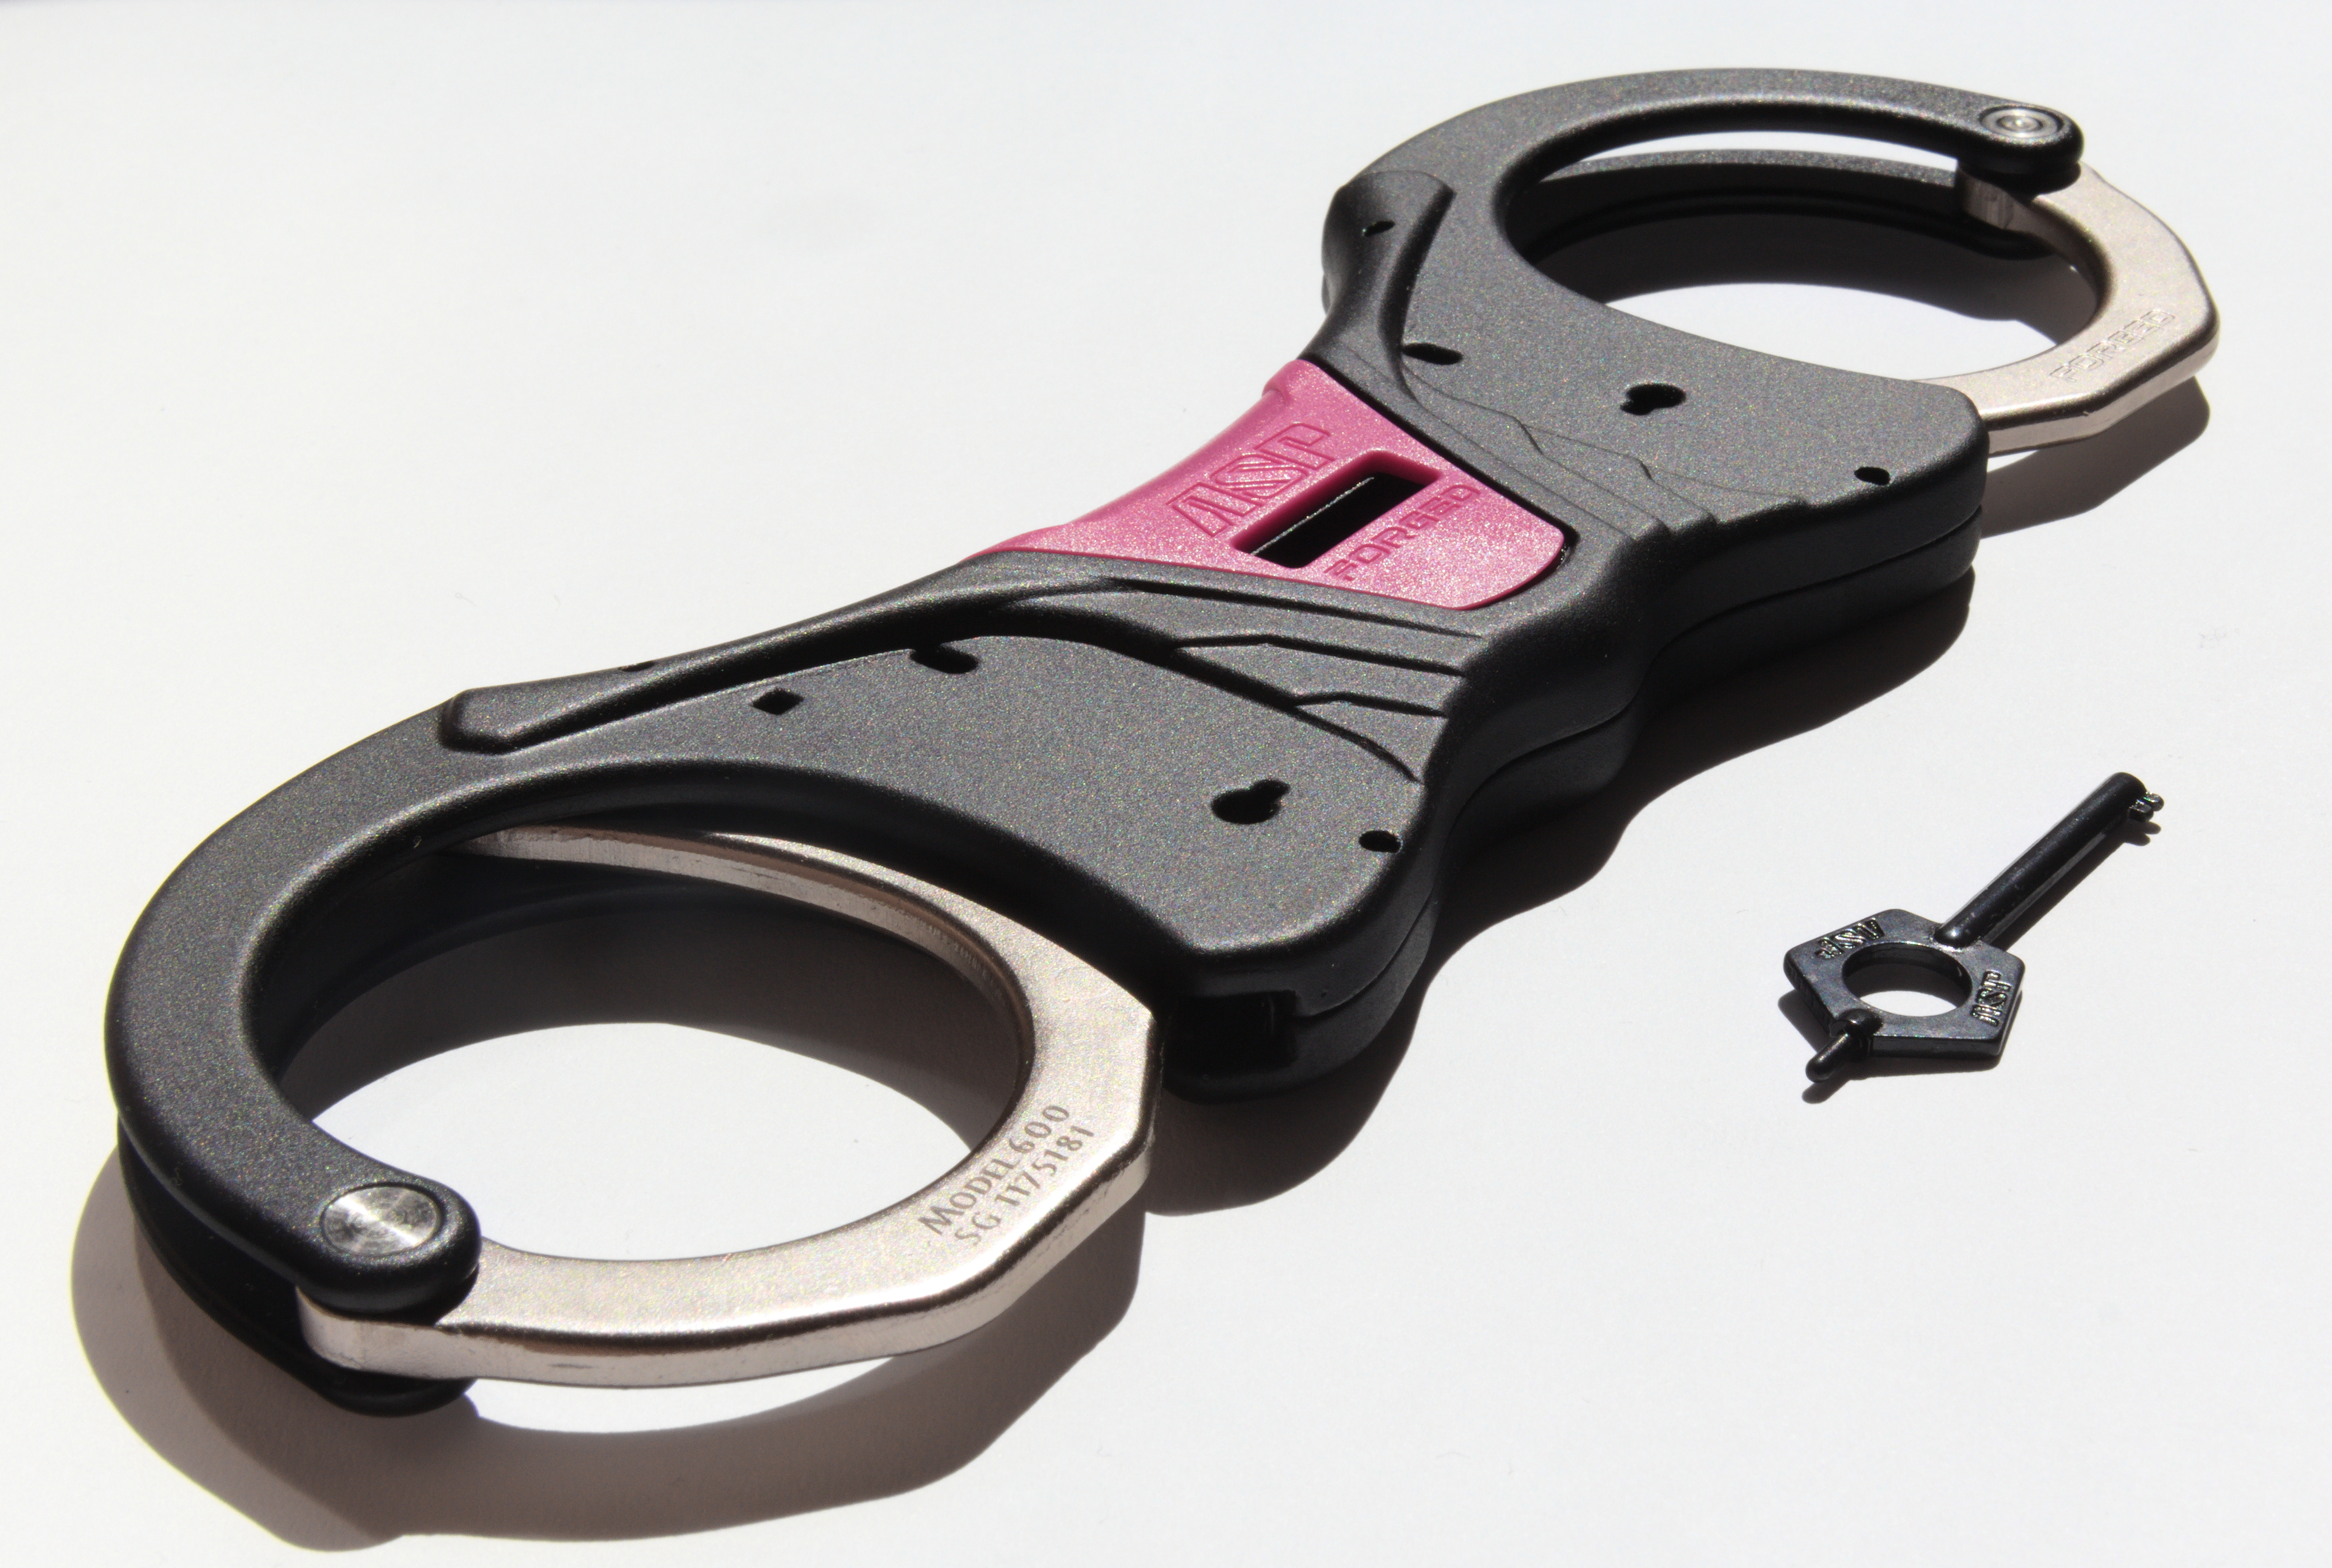 ASP Identifier Rigid Ultra Cuffs Steel Pink (2 Pawl) - 46023 / Model 600 Pink 